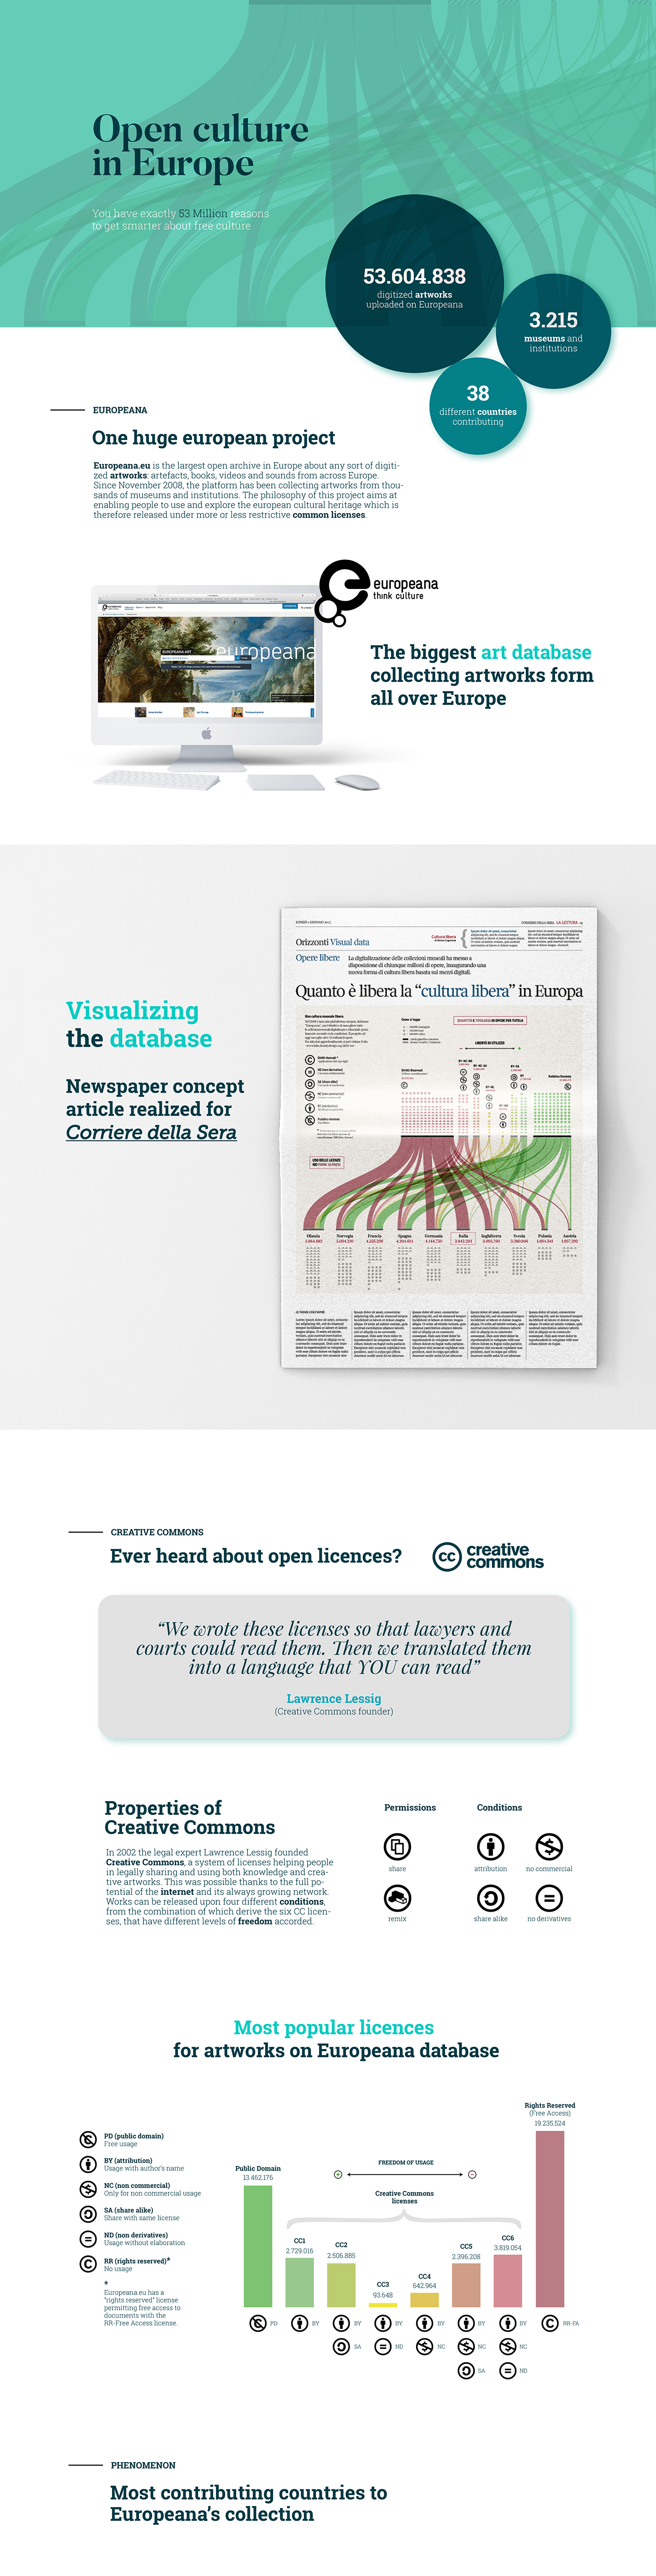 infographic dataviz data visualization ludovico pincini creative commons Data